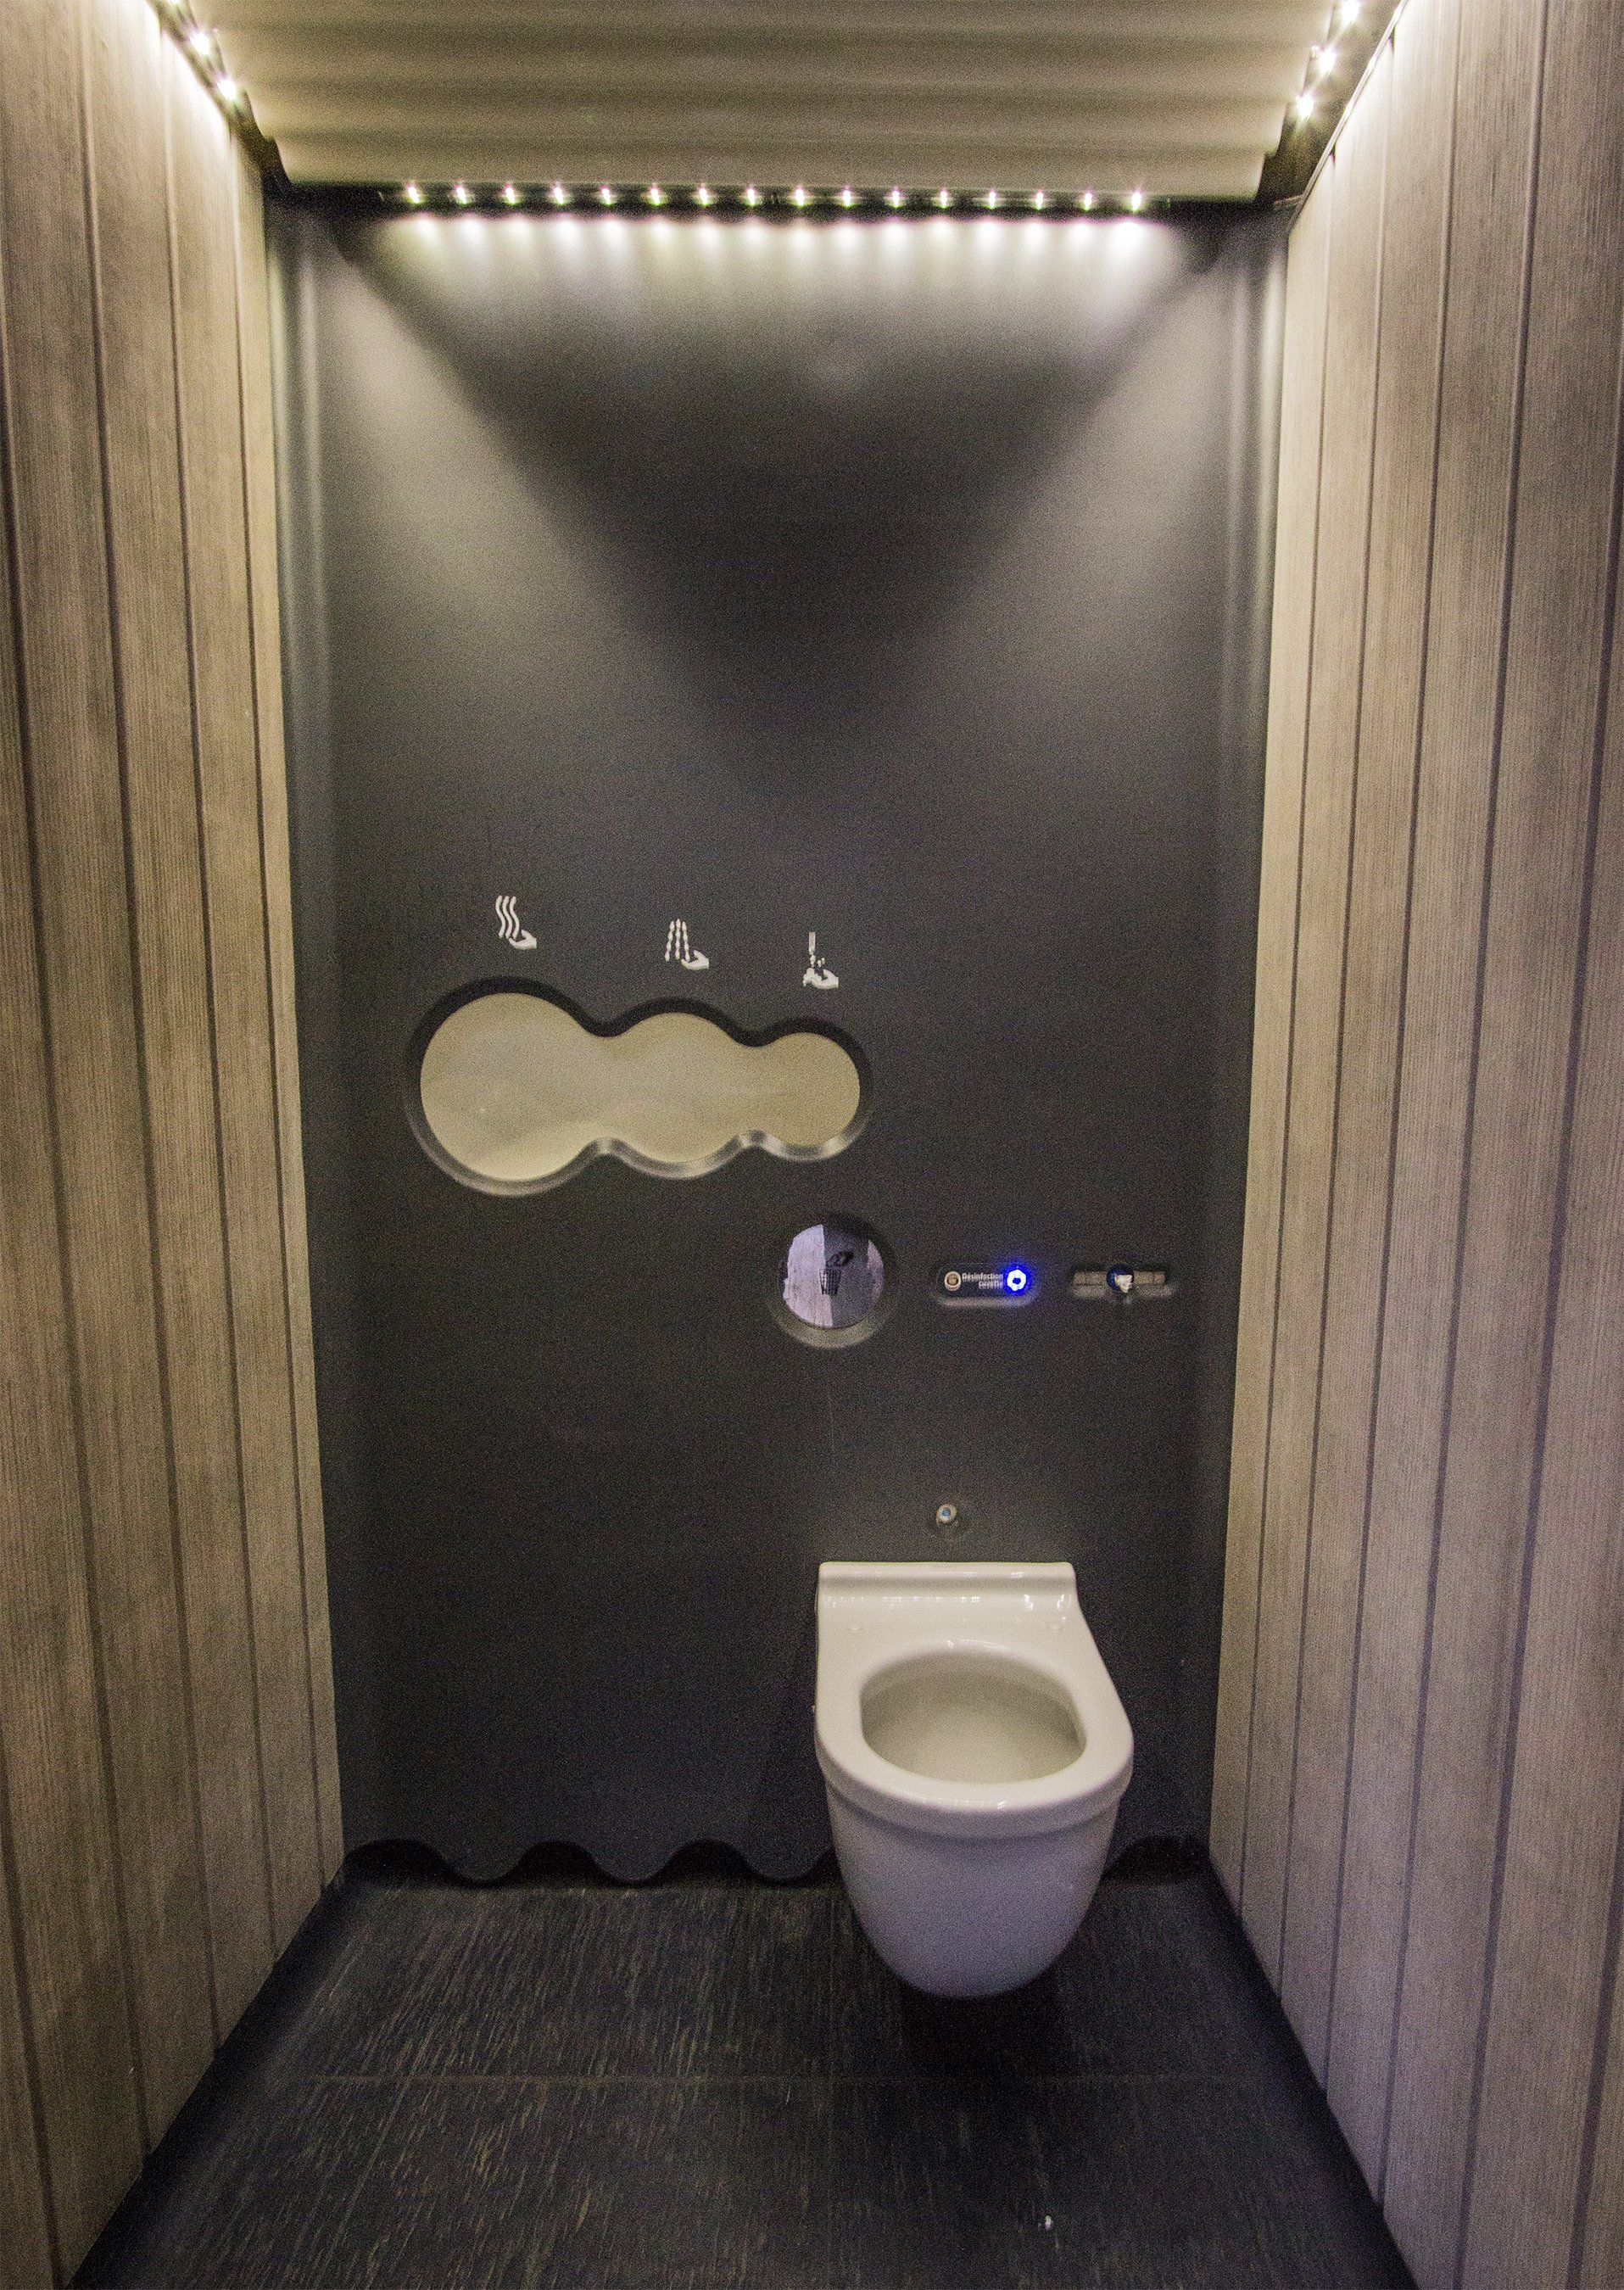 college toilet stall gloryhole sex photo